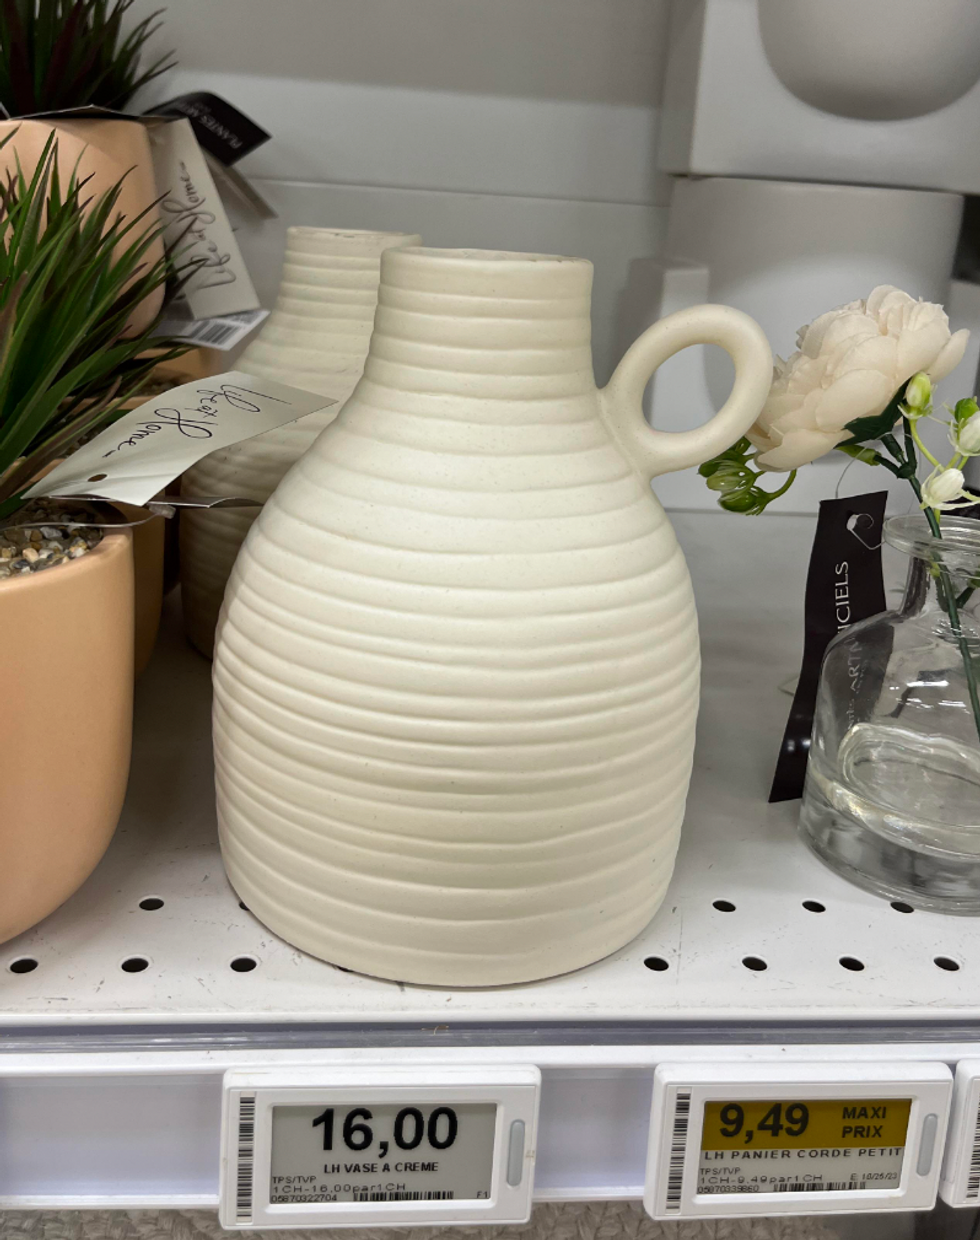 Cream-colored vase from Maxi & Cie.